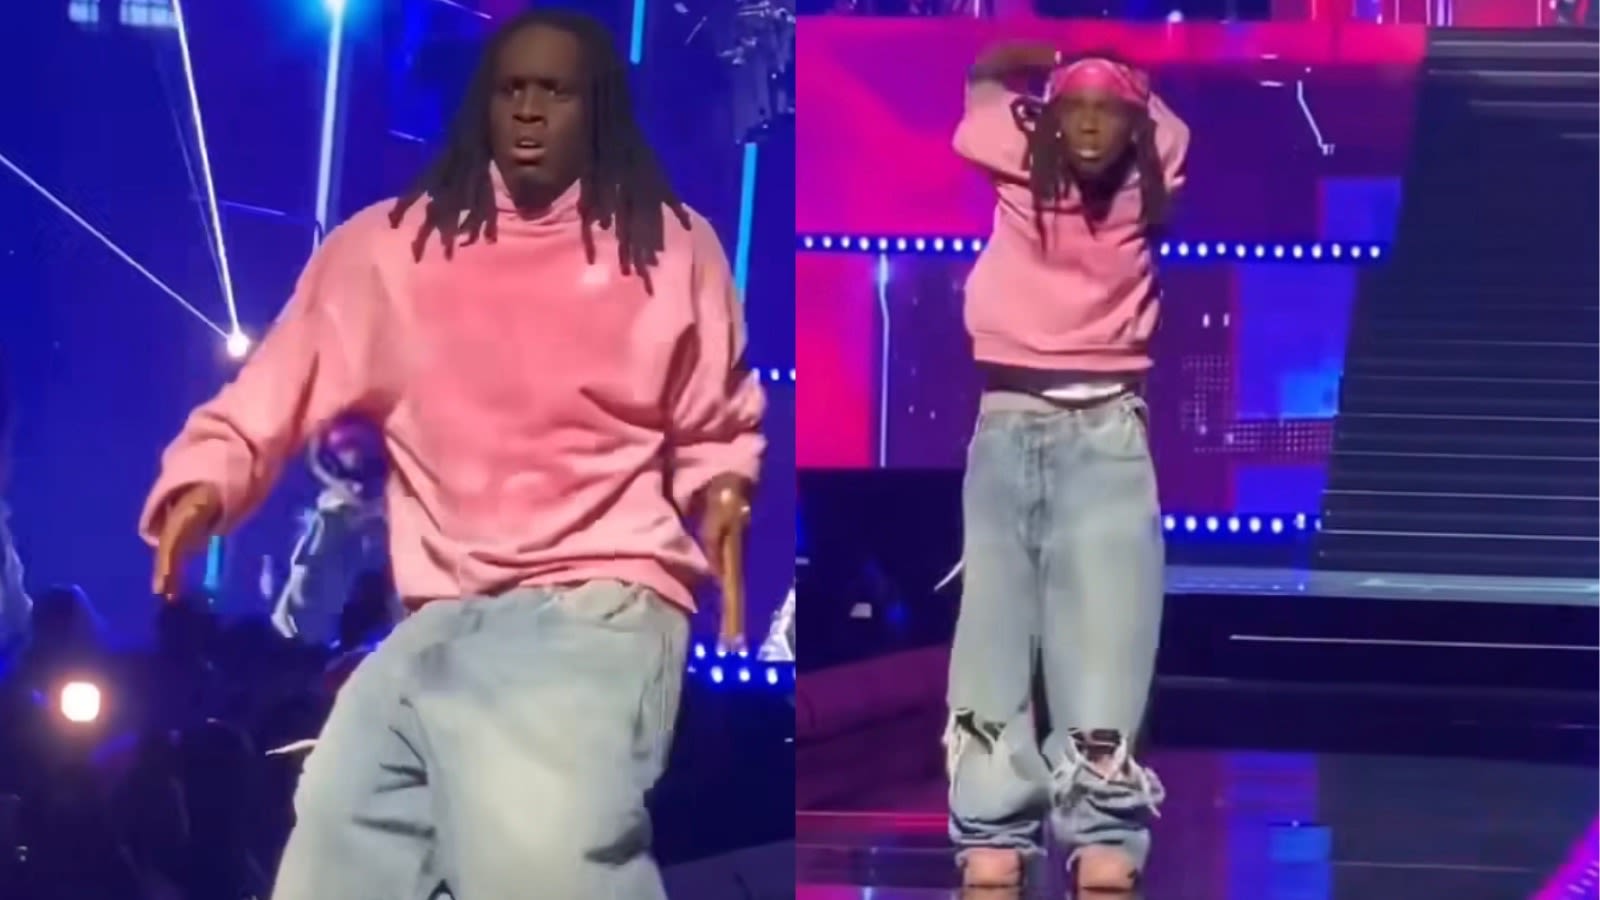 Kai Cenat stuns fans with “legendary” dance moves at Nicki Minaj concert - Dexerto